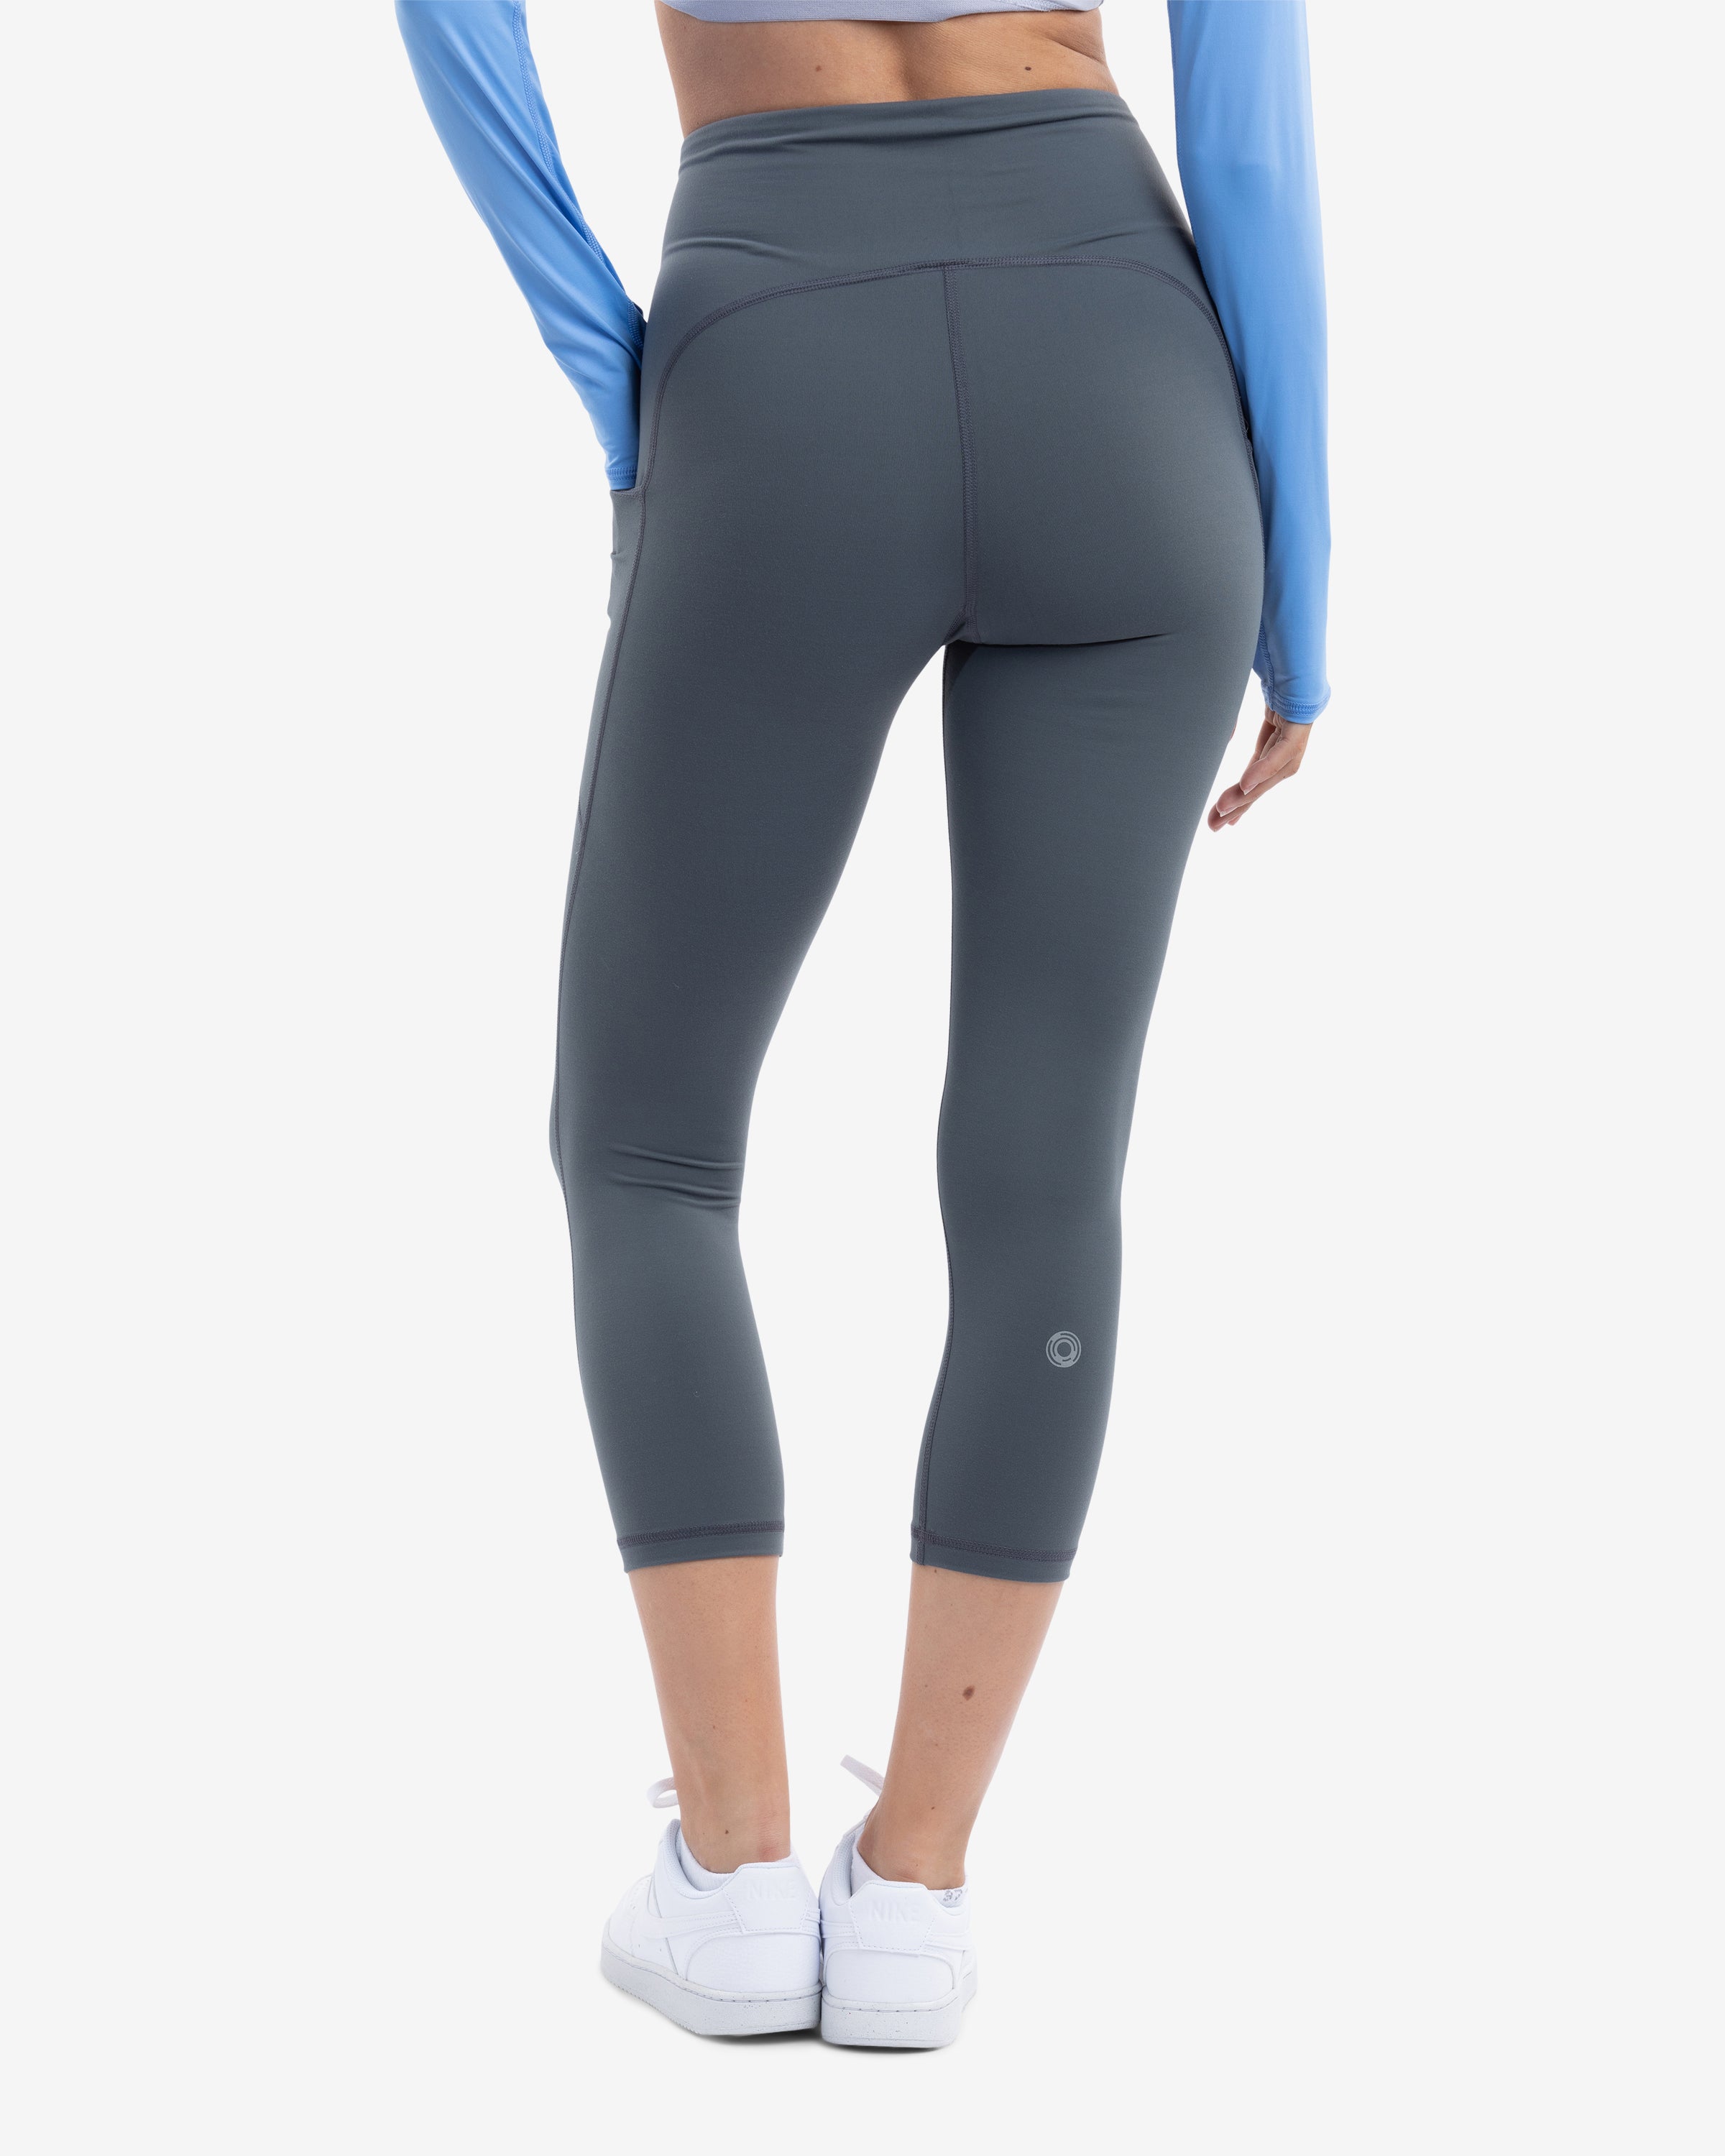 Ankle crop leggings ⎮Women's sports bottoms ⎮MOOV Activewear